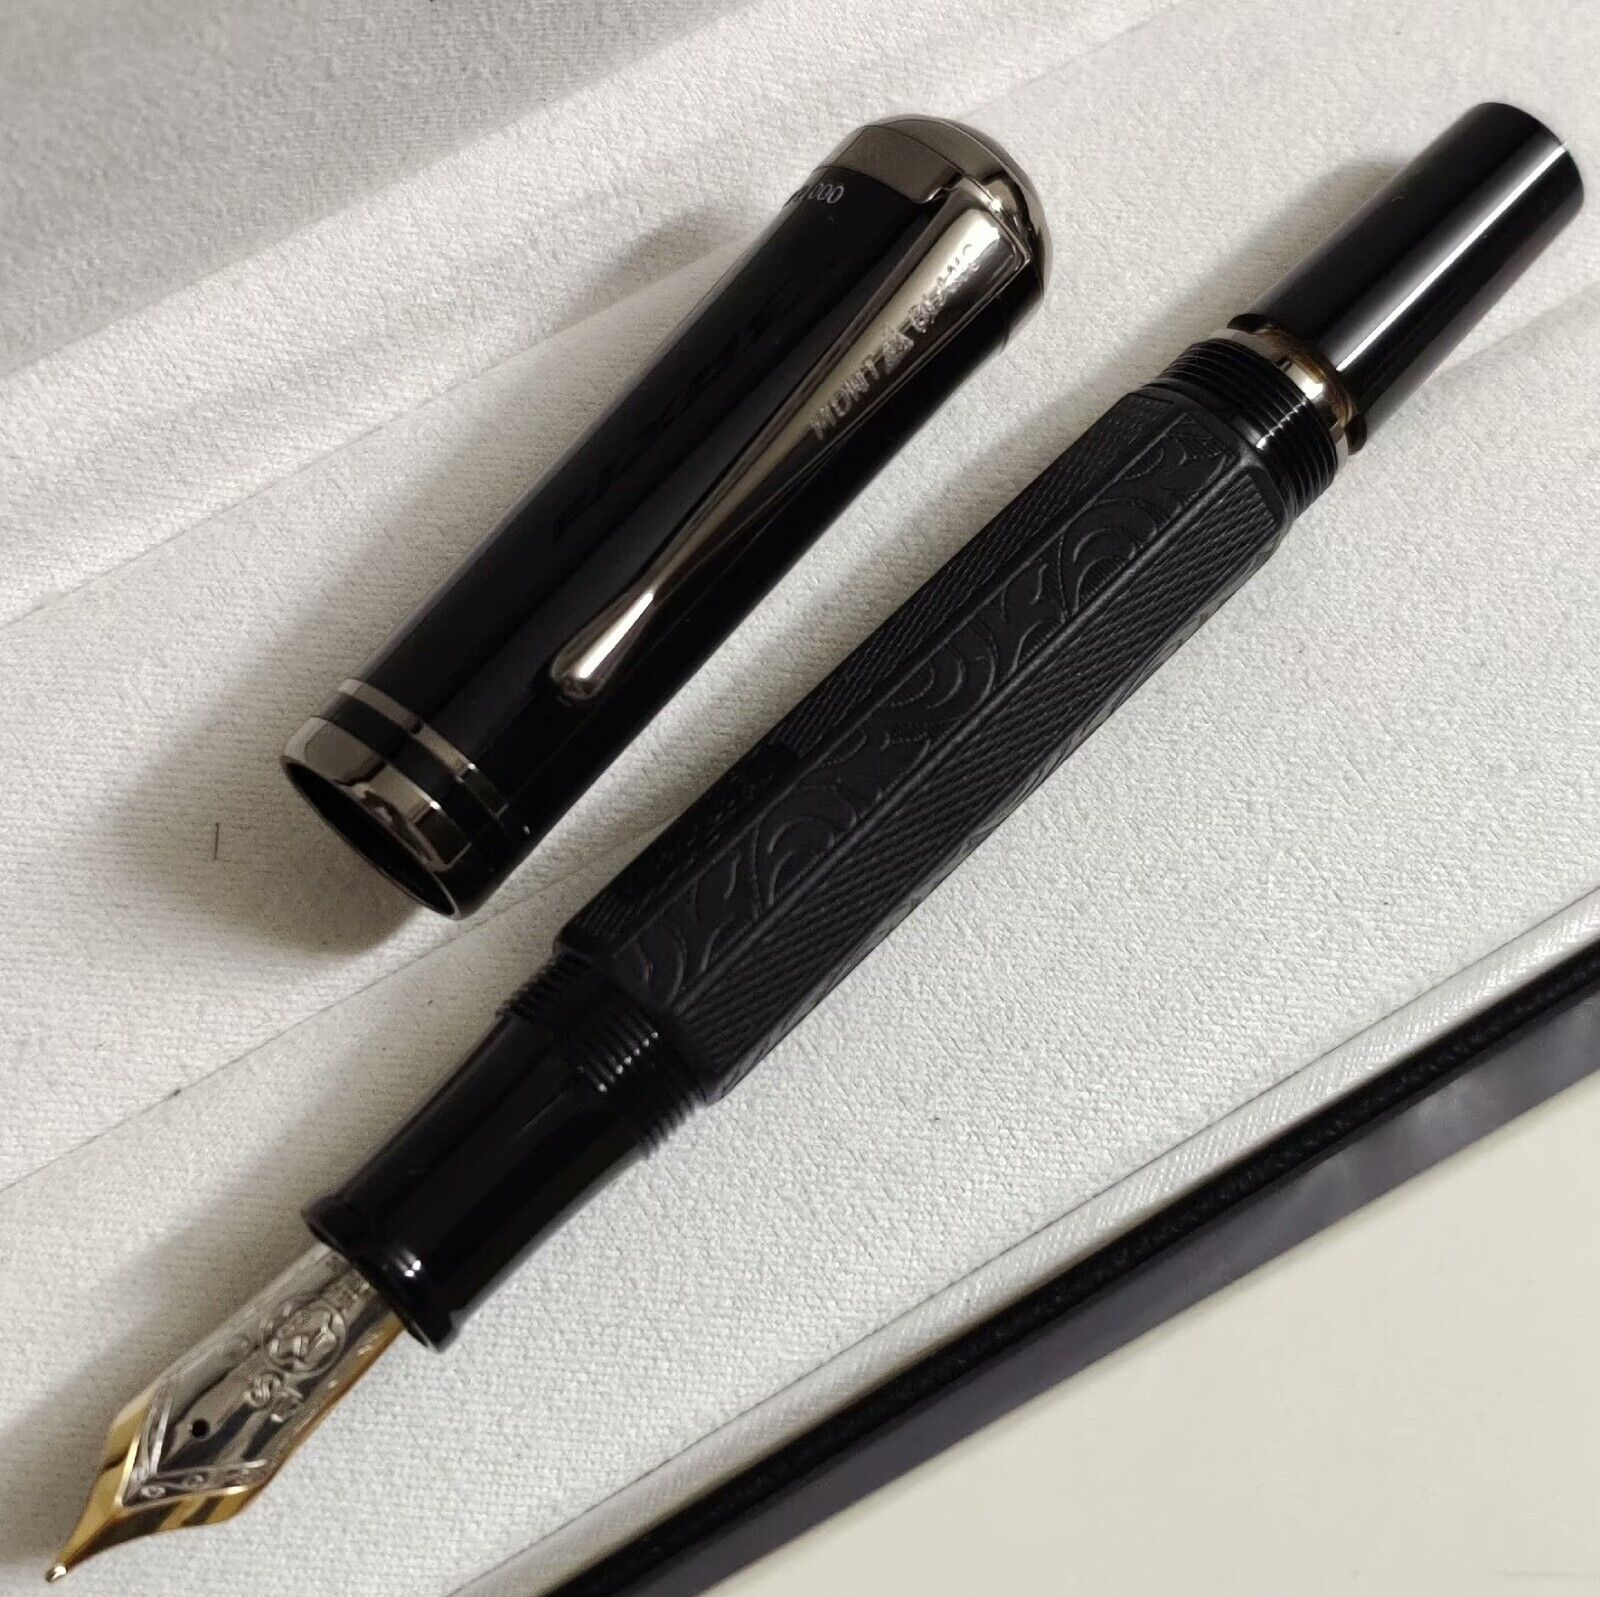 Luxury Great Writers Proust Series Black Color M nib Fountain Pen No Box